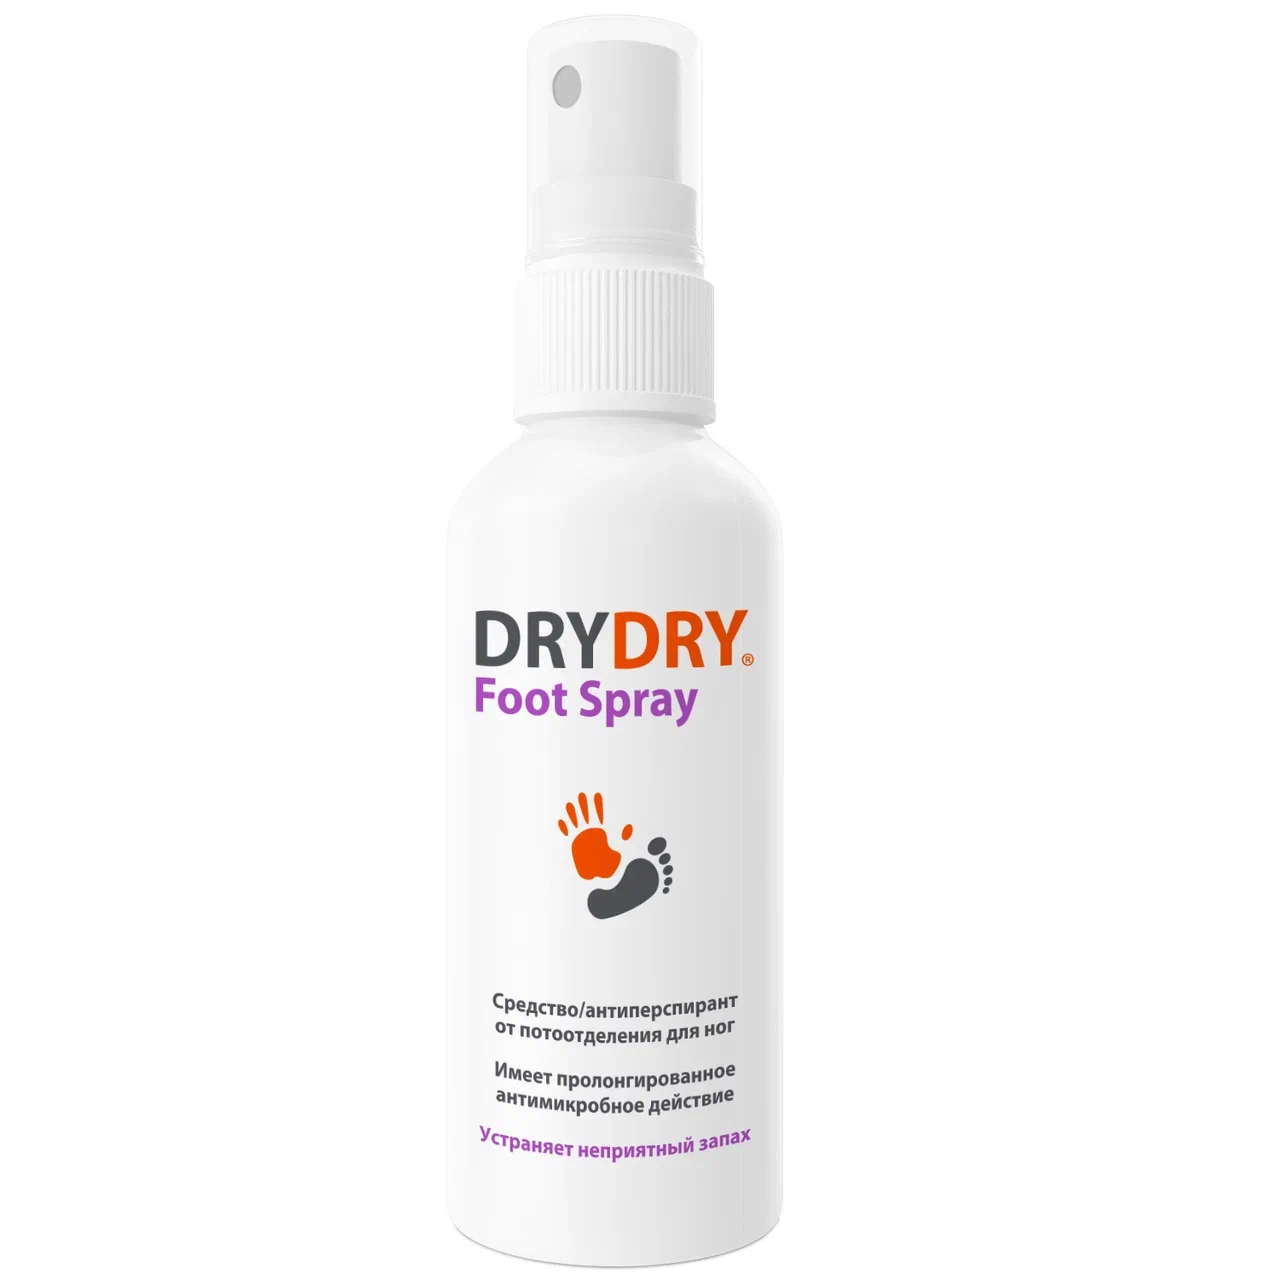 Дезодорант-антиперспирант для ног Dry Dry от пота и запаха, от гипергидроза, спрей, 100 мл zeitun дезодорант нейтральный минеральный антиперспирант для мужчин без запаха